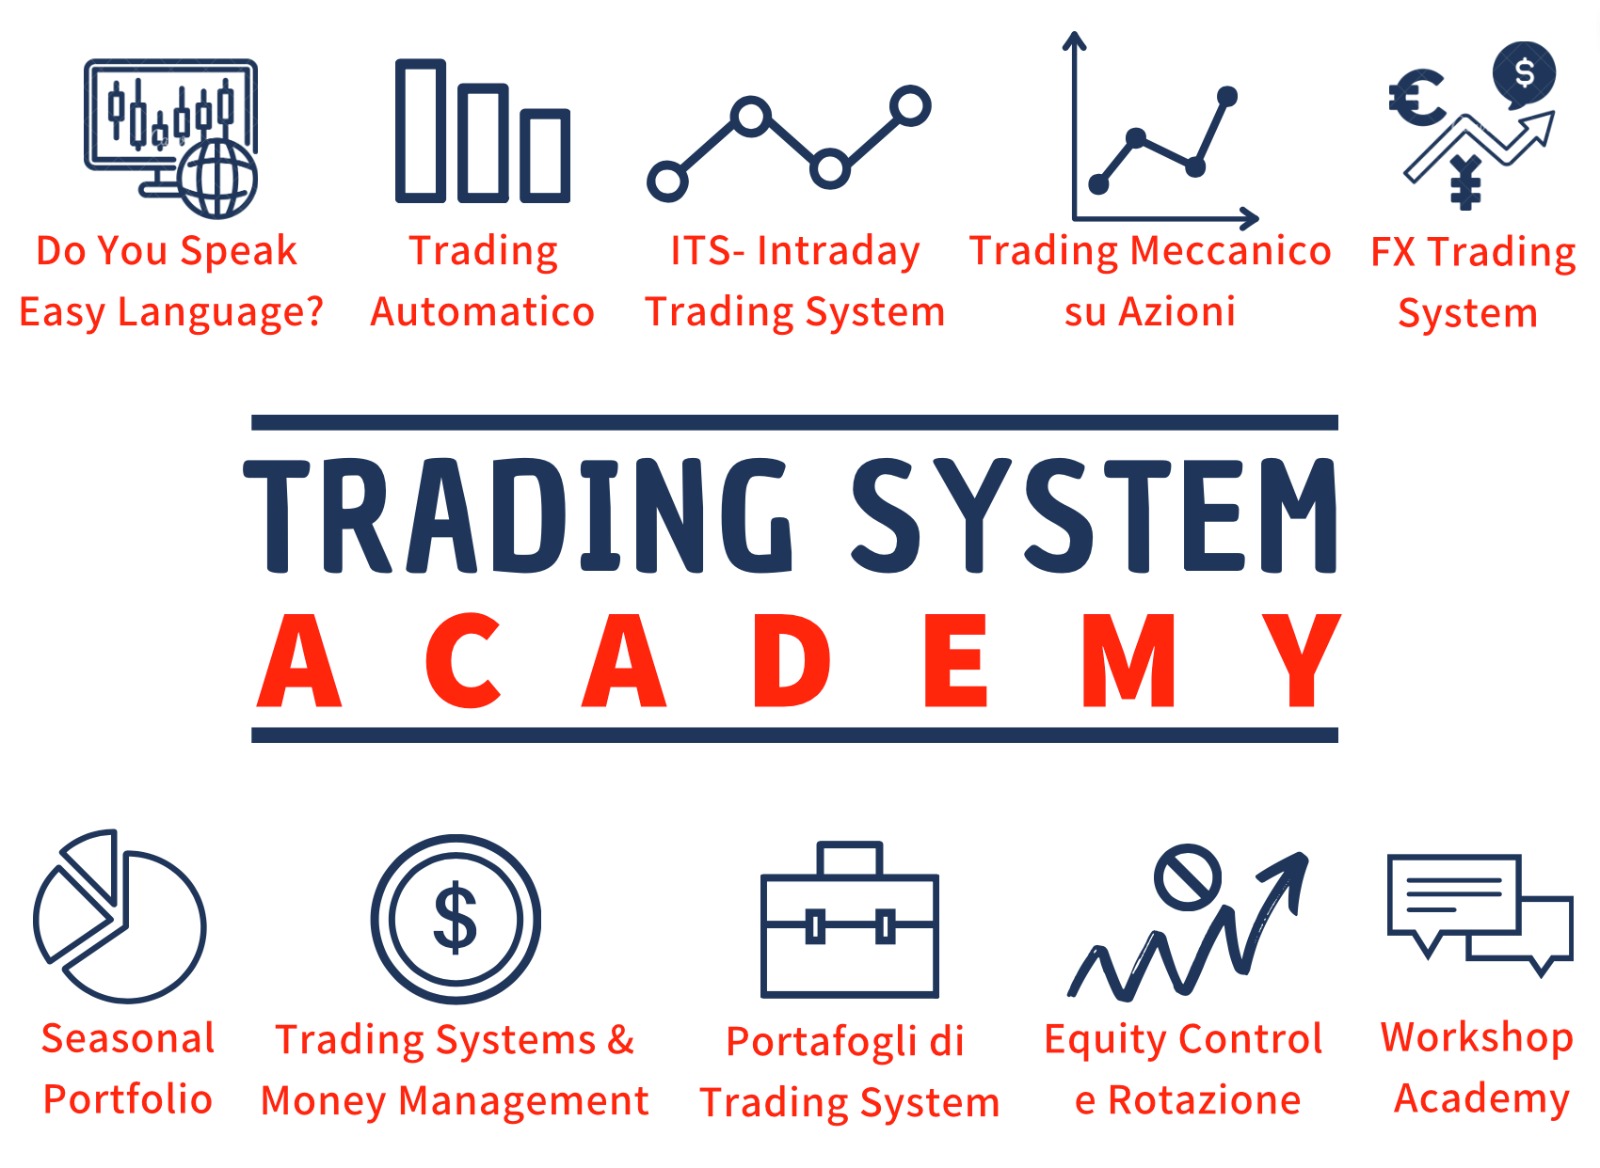 Trading Academy Italia (accademia trading)